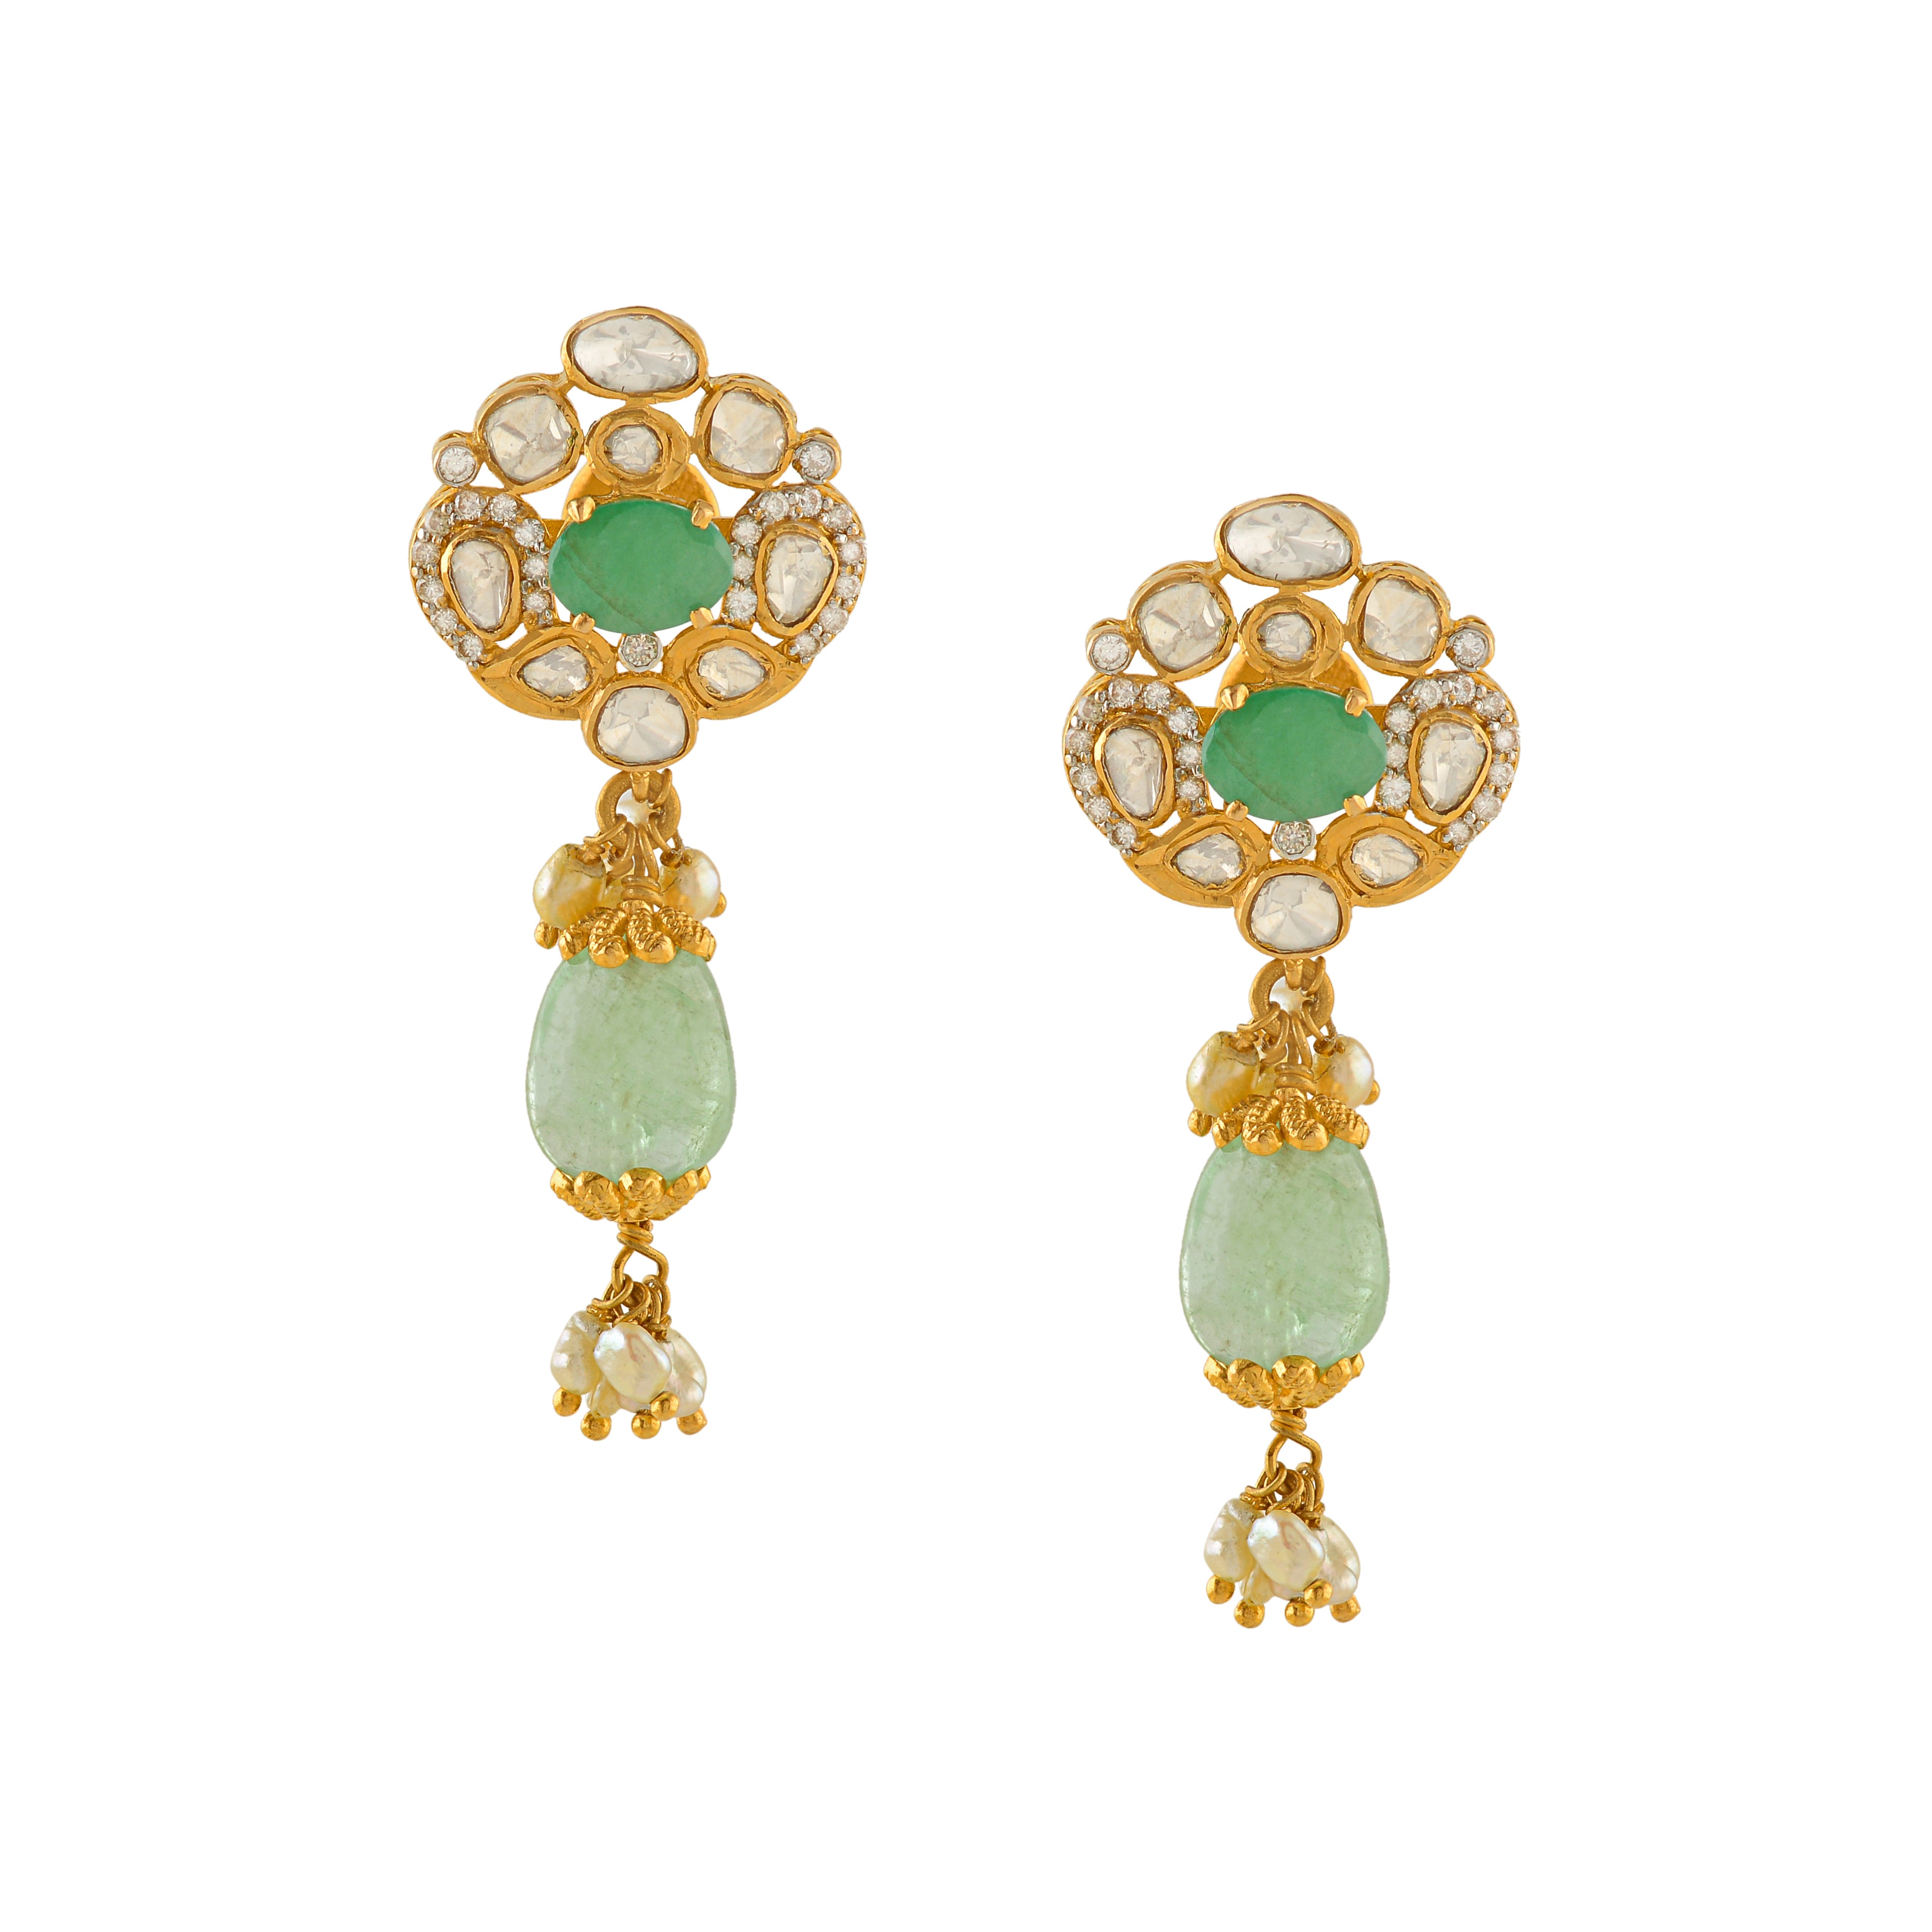 Polk Stud Earrings With Emerald Drops